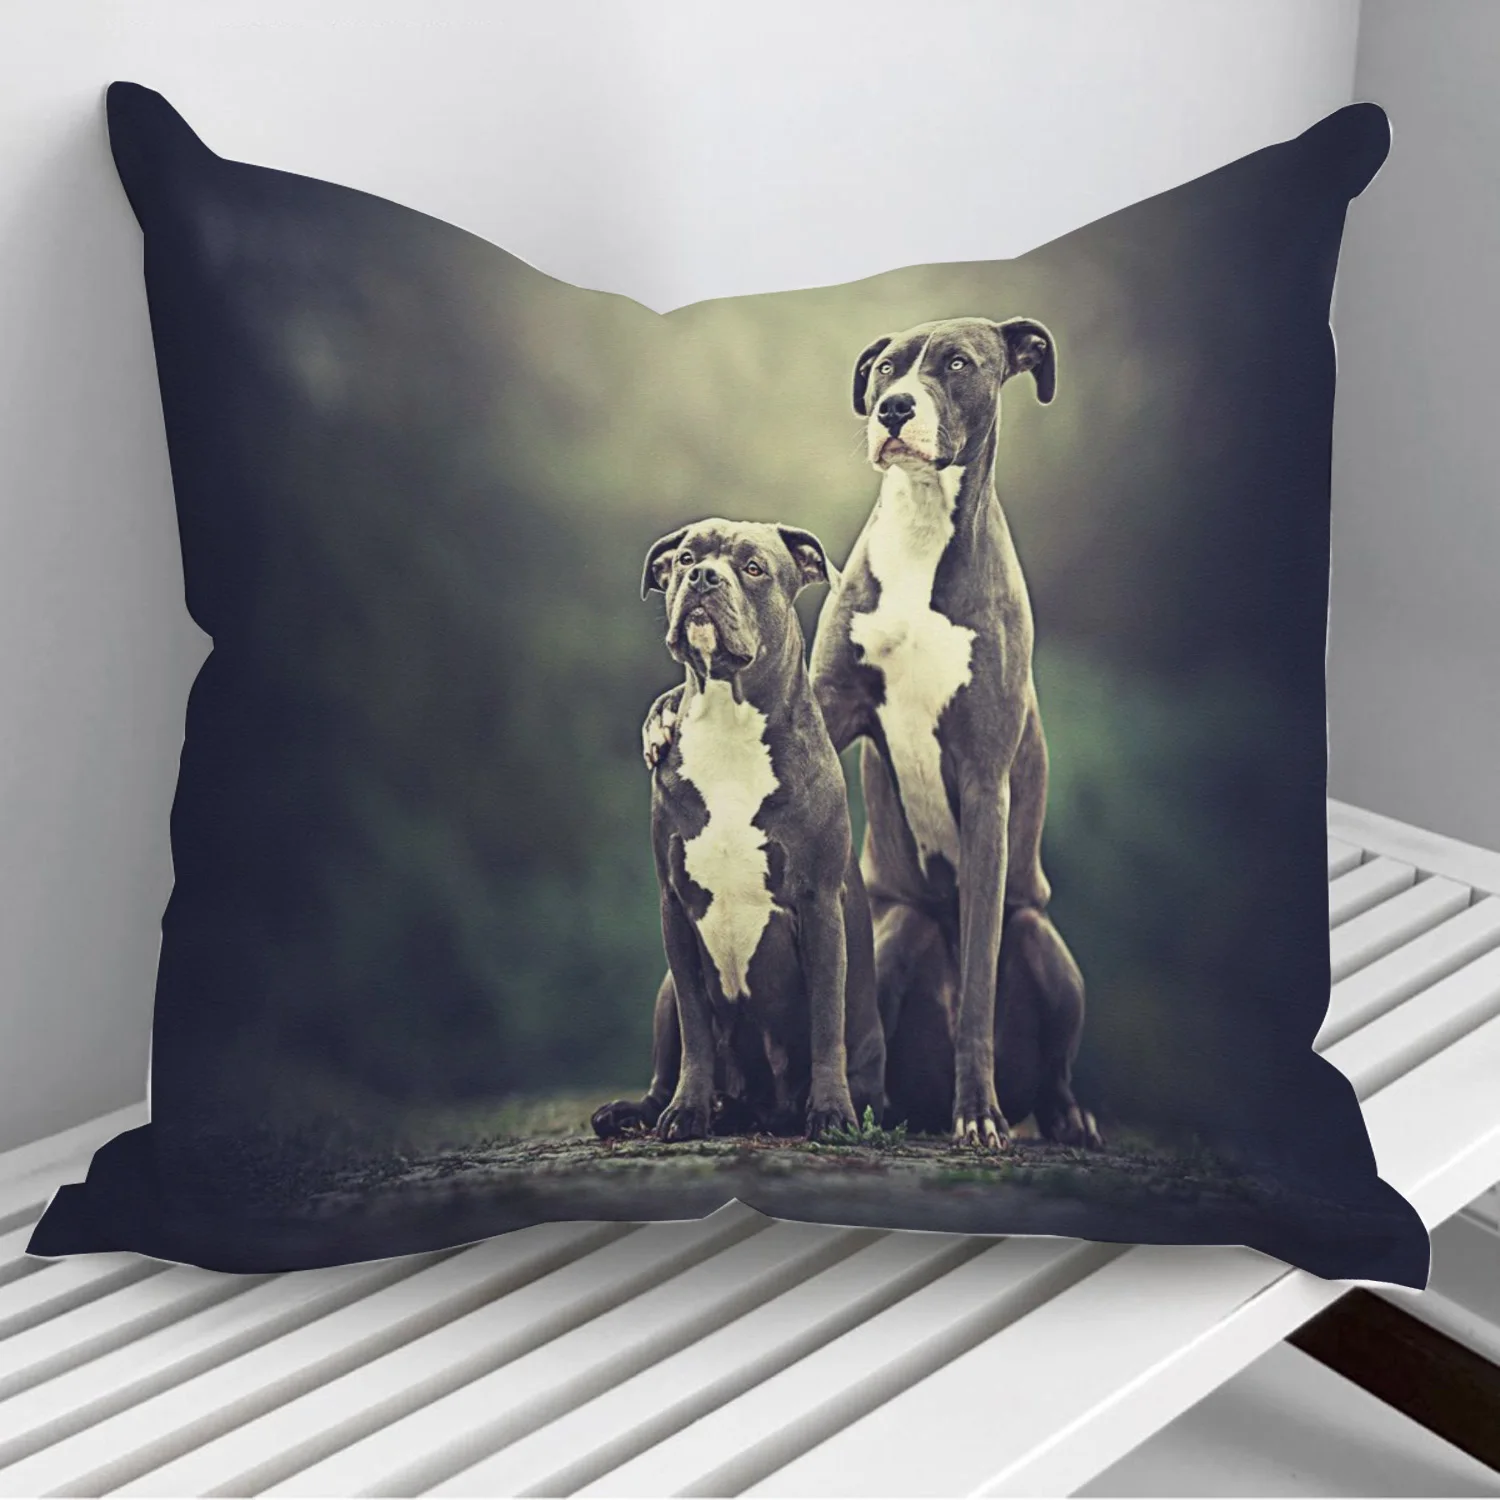 

American Pit Bull Terrier Throw Pillows Cushion Cover On Sofa Home Decor 45*45cm 40*40cm Gift Pillowcase Cojines Dropshipping